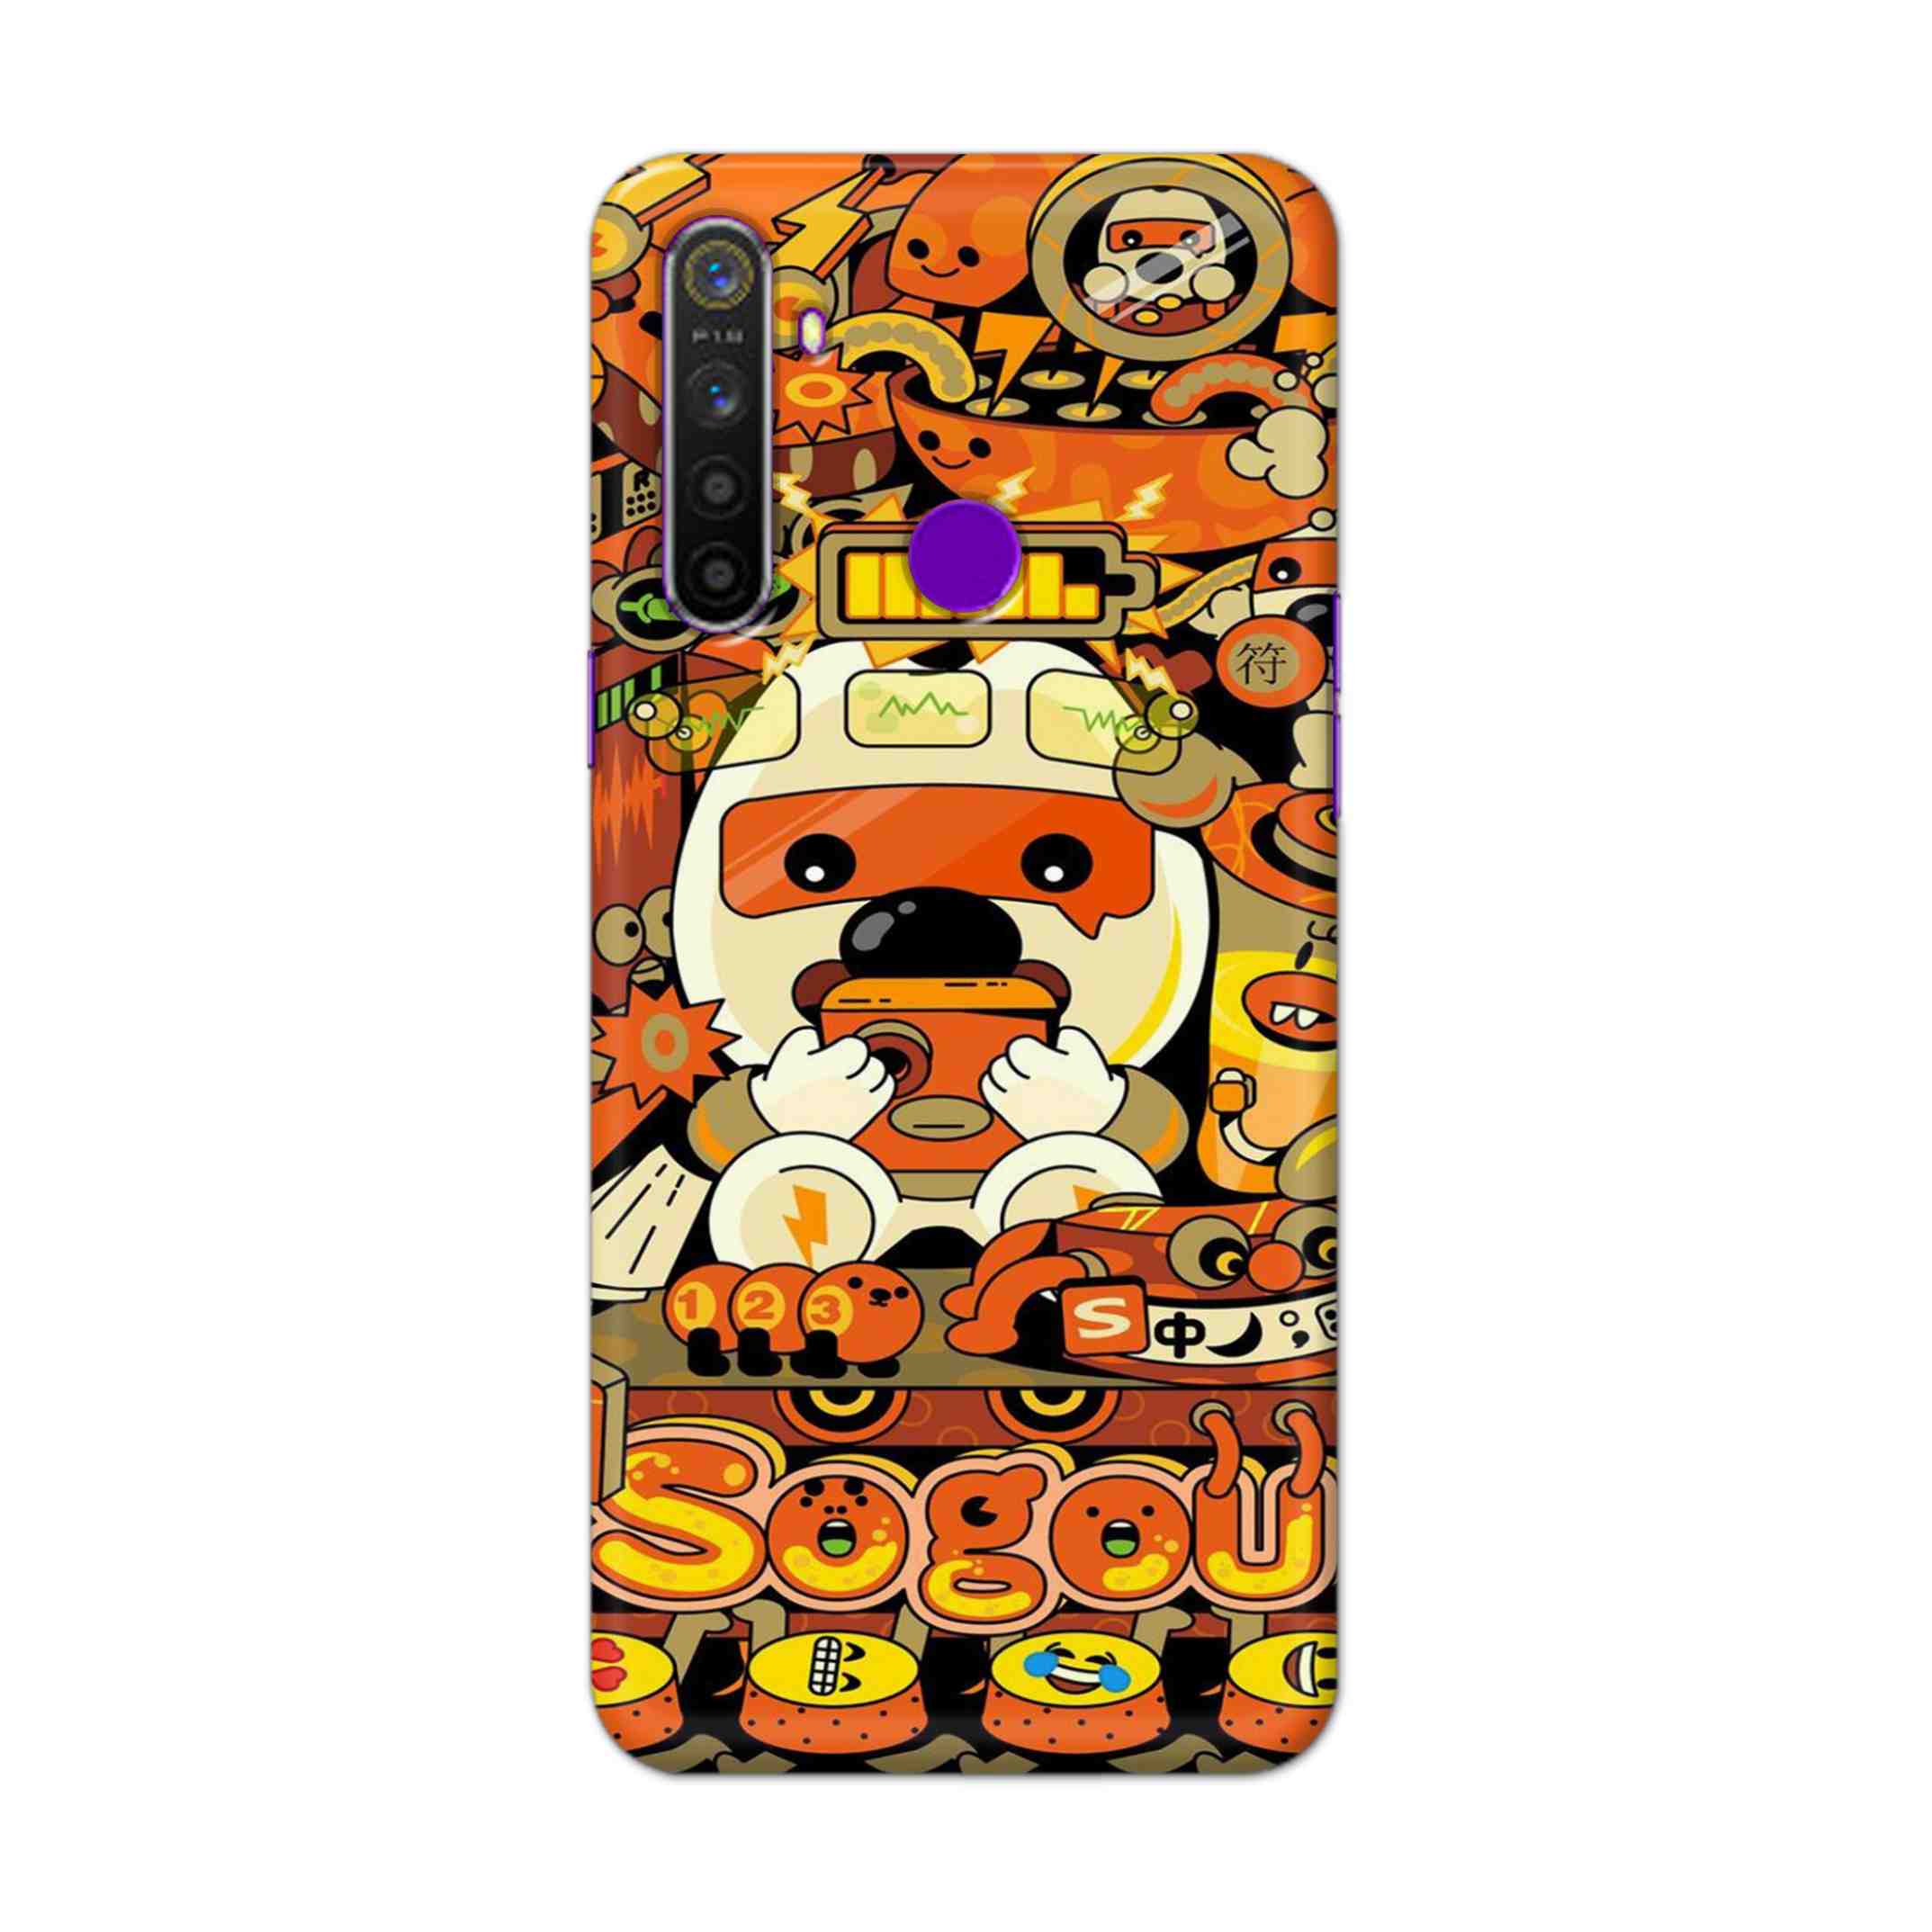 Buy Sogou Hard Back Mobile Phone Case Cover For Realme 5 Pro Online